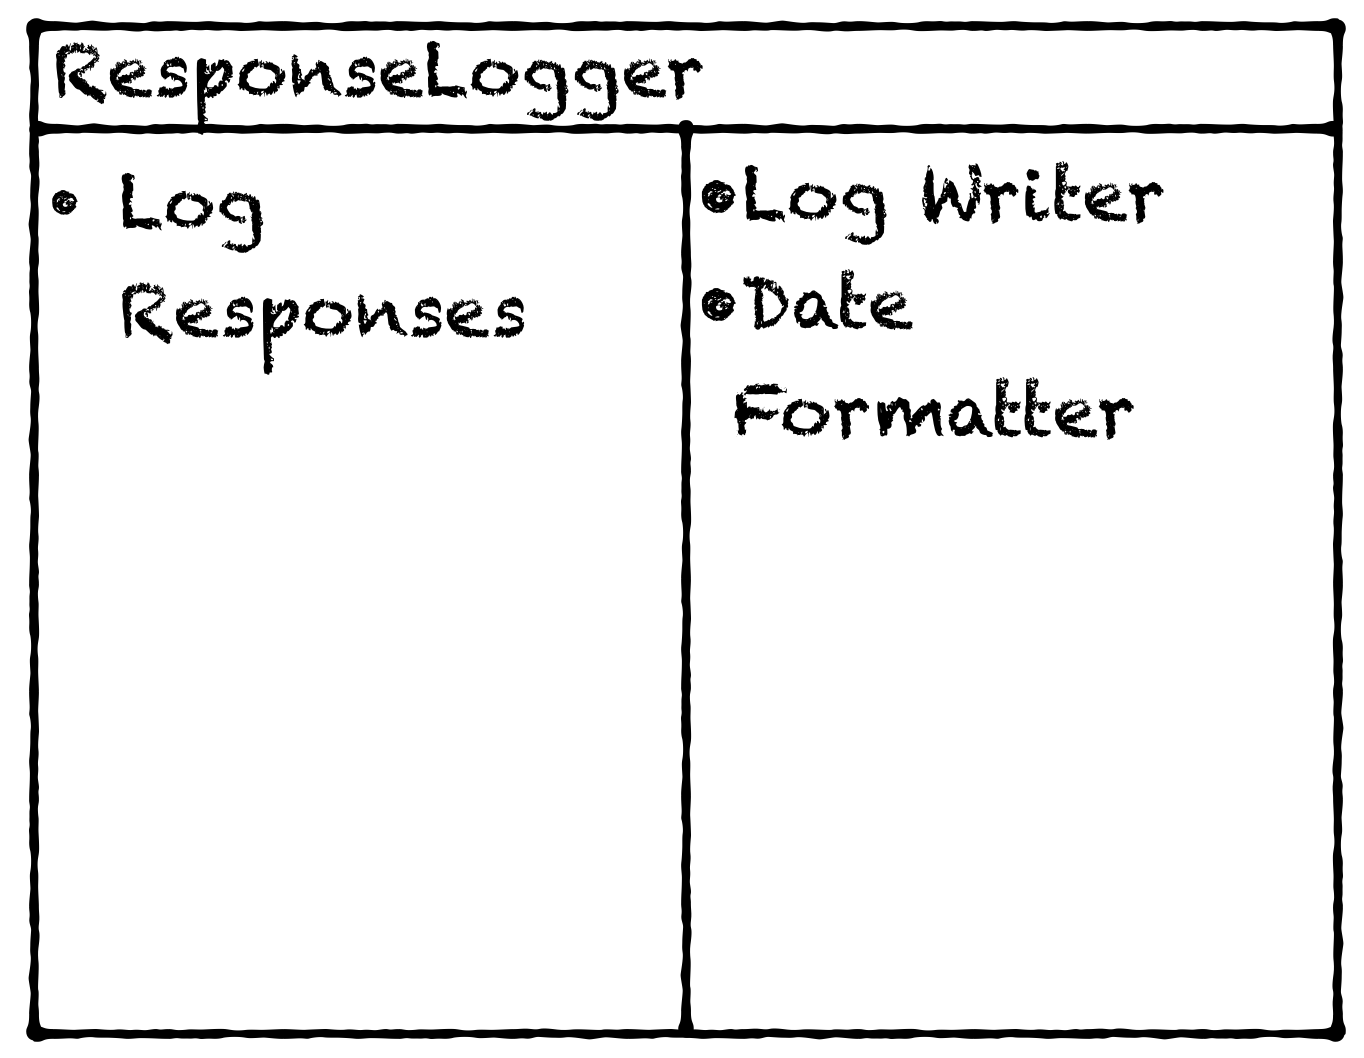 Response Logger